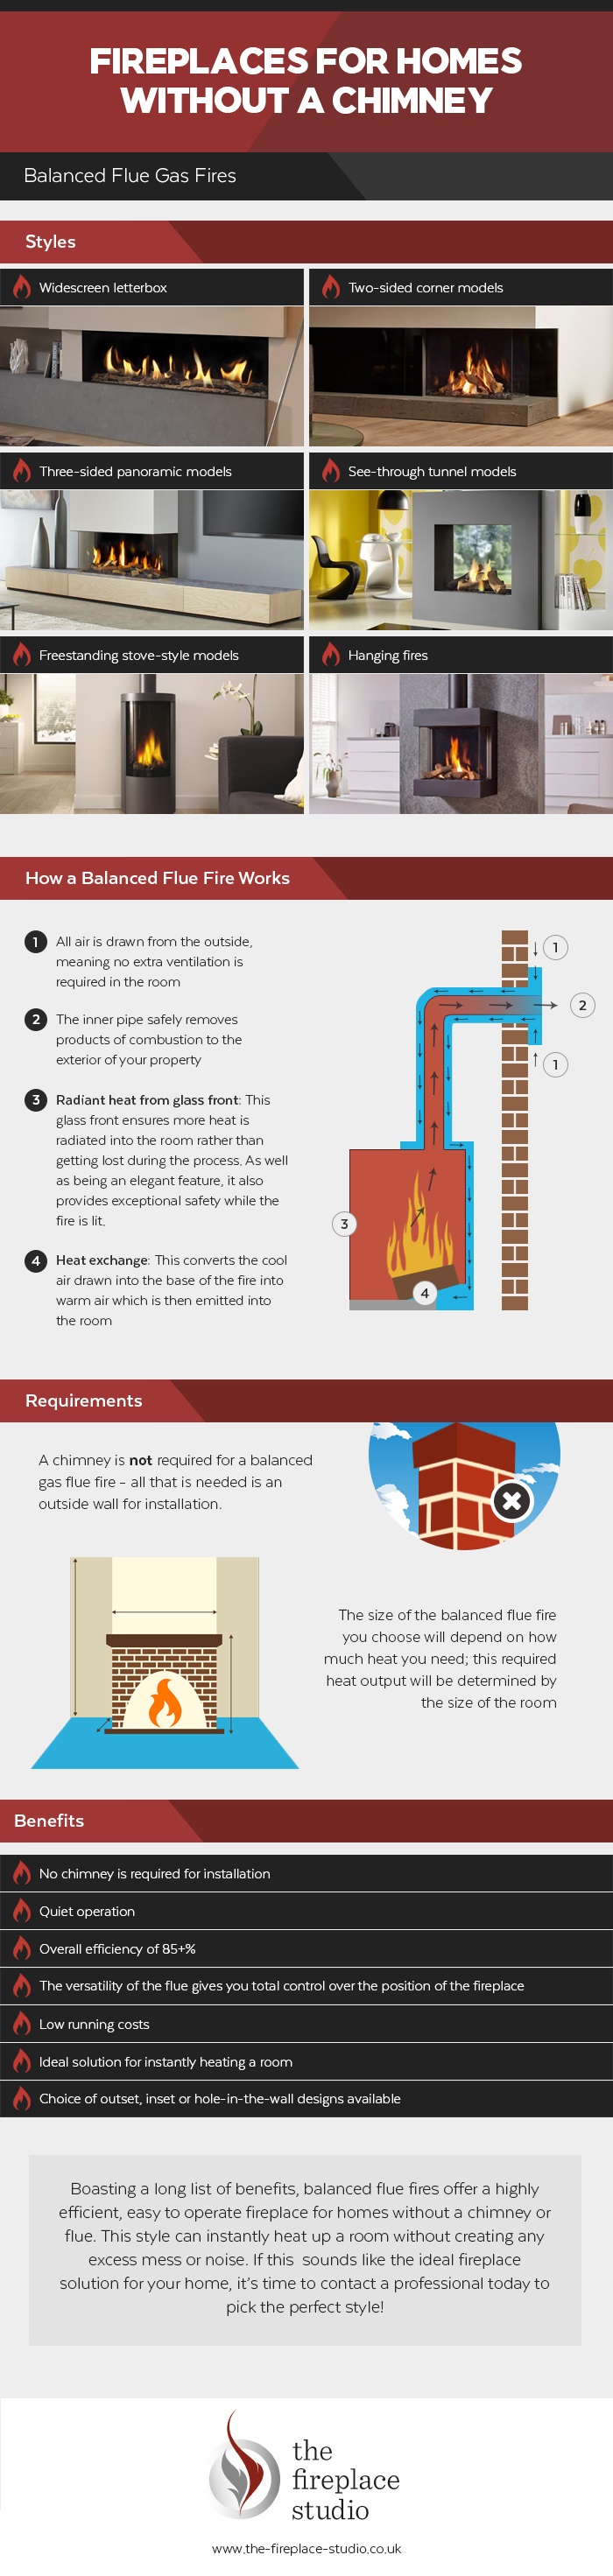 Balanced Flue Gas Fires infographic